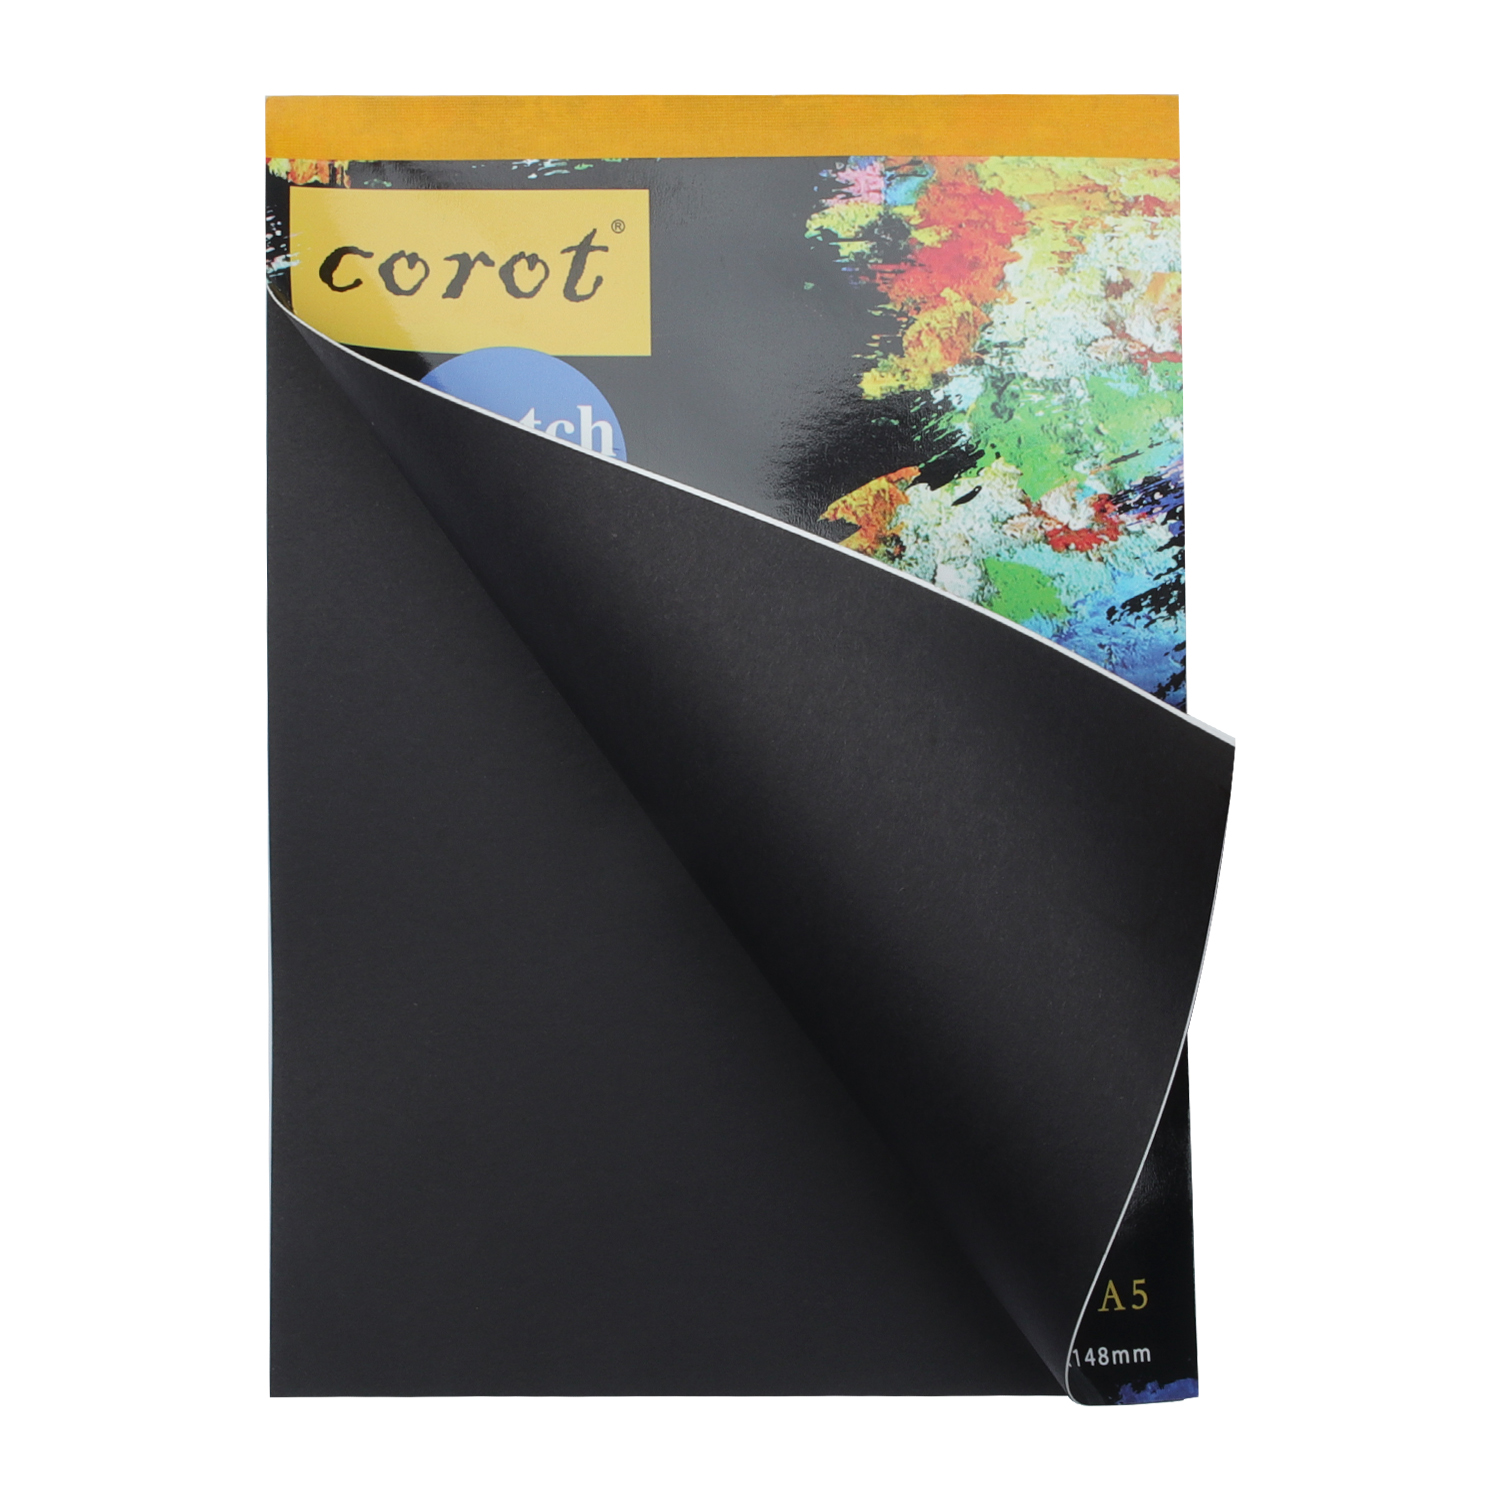 A4/A5 Paper Vintage Black Cardboard Premium Premium Drawing Paper Paper 140GSM/25 SHOET